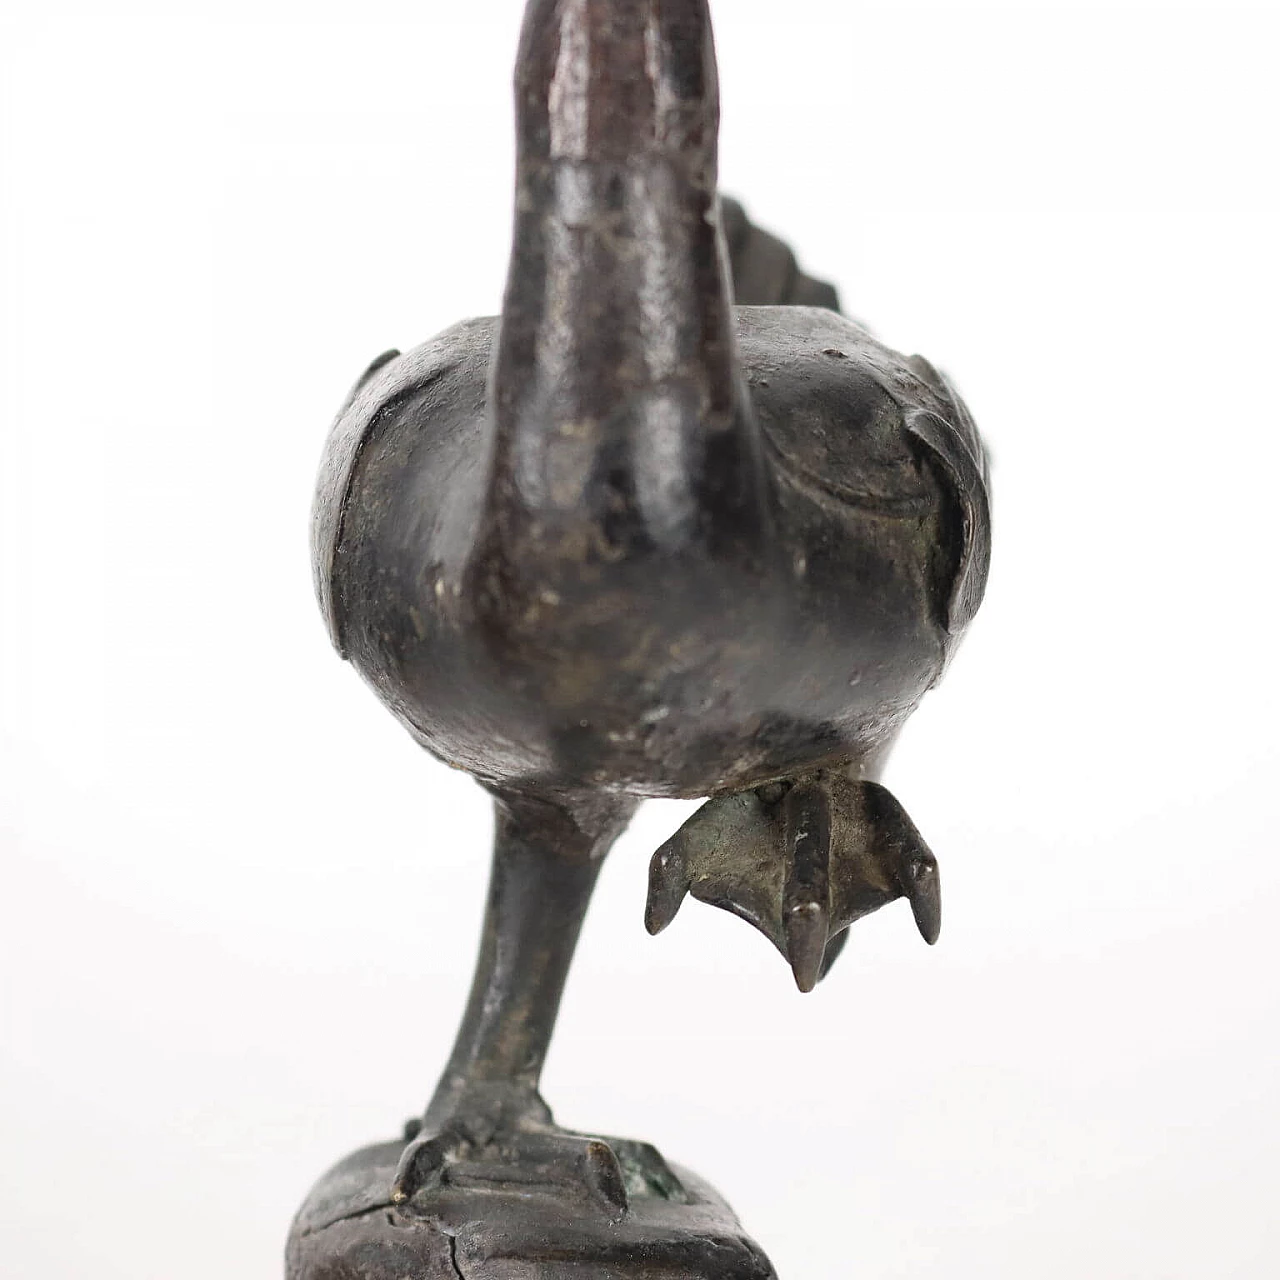 Portacandela cinese in bronzo con anatra, '700 4